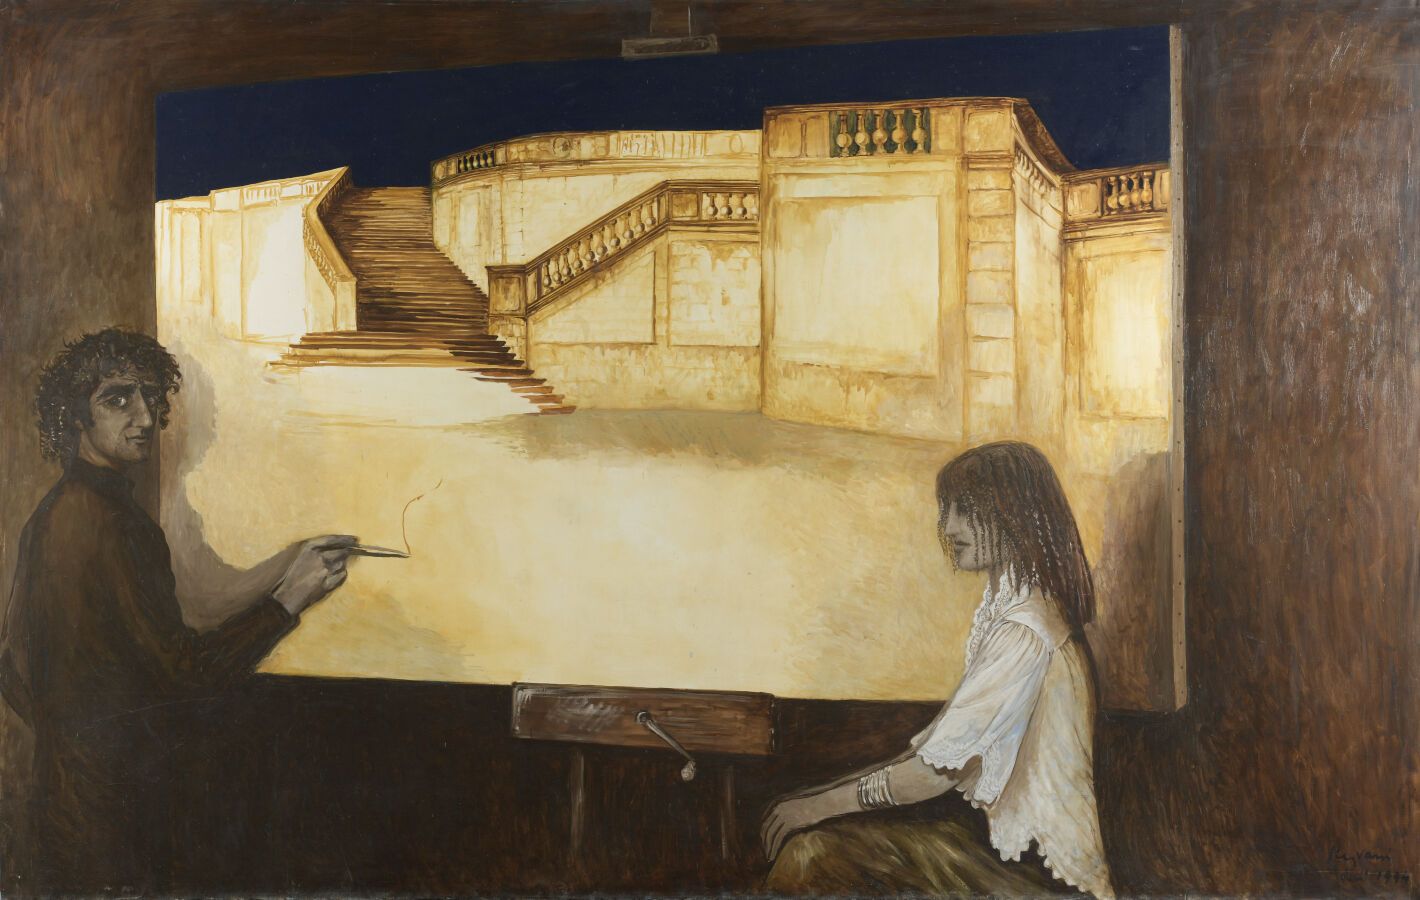 Null 谢尔盖-雷兹瓦尼（生于1928年

尼姆的蓝，1974年

布面油画，右下方有签名和日期1974年4月

H.190厘米 - 宽300厘米

展览：R&hellip;